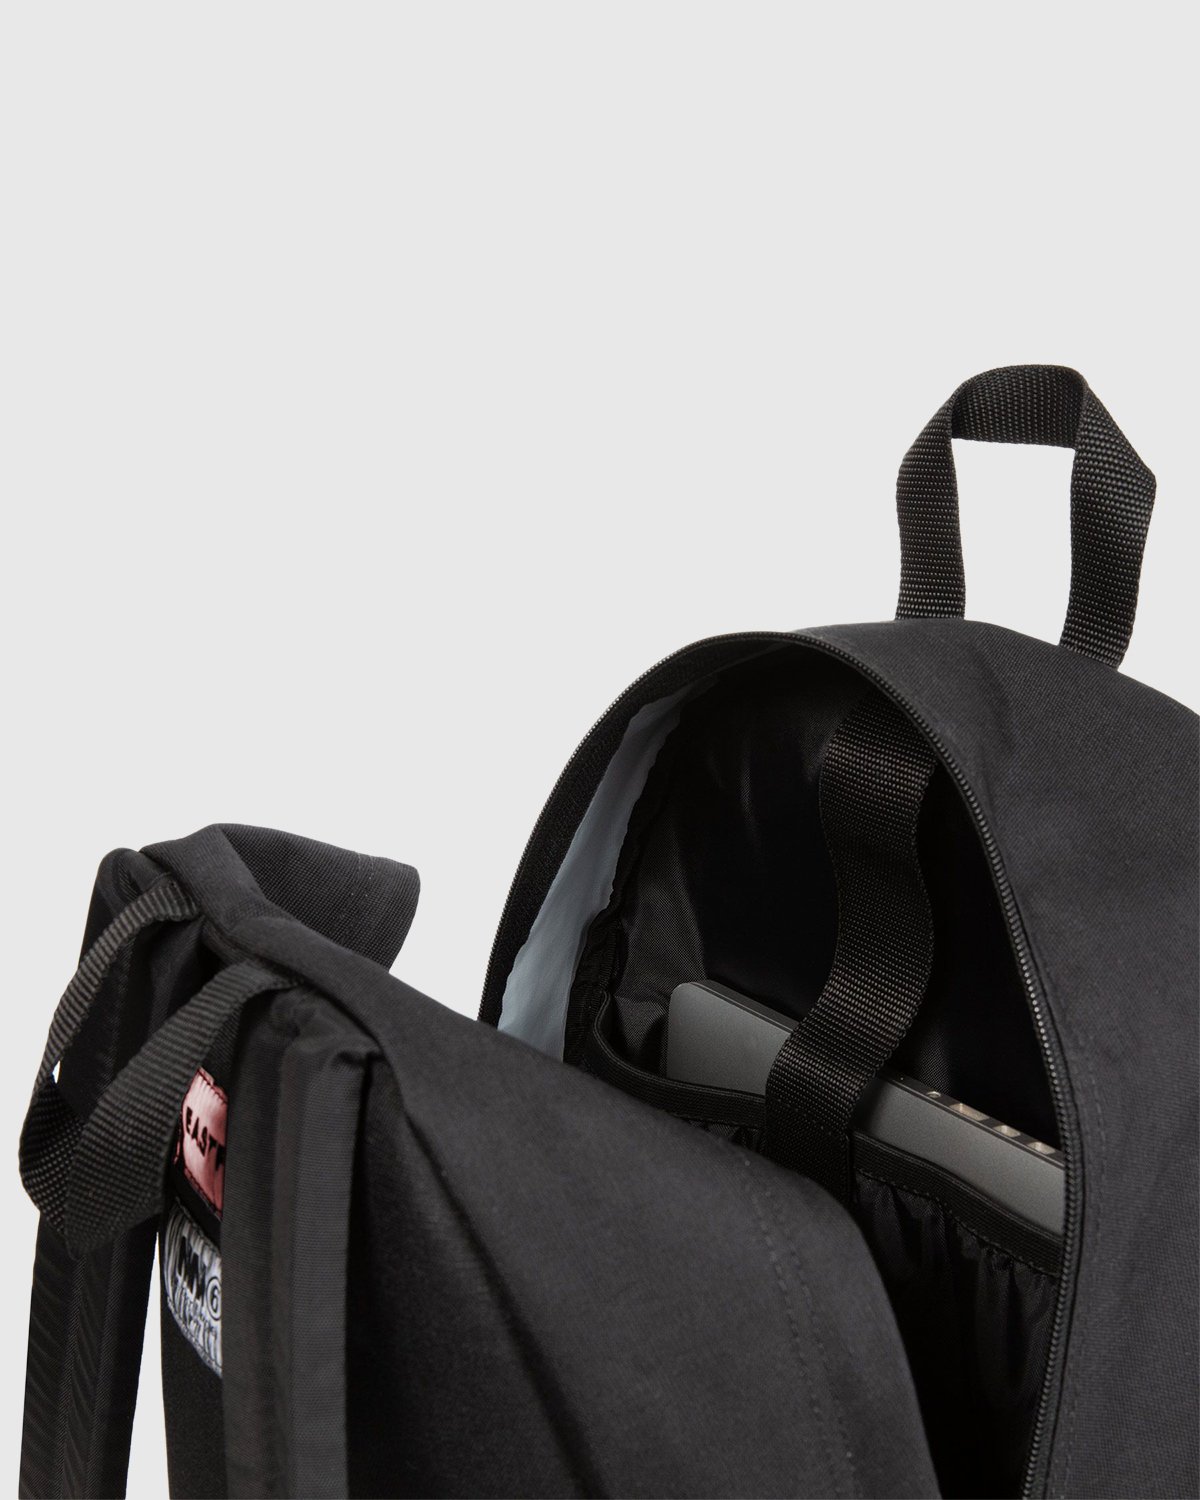 MM6 Maison Margiela x Eastpak - Padded XL Backpack Black - Accessories - Black - Image 5